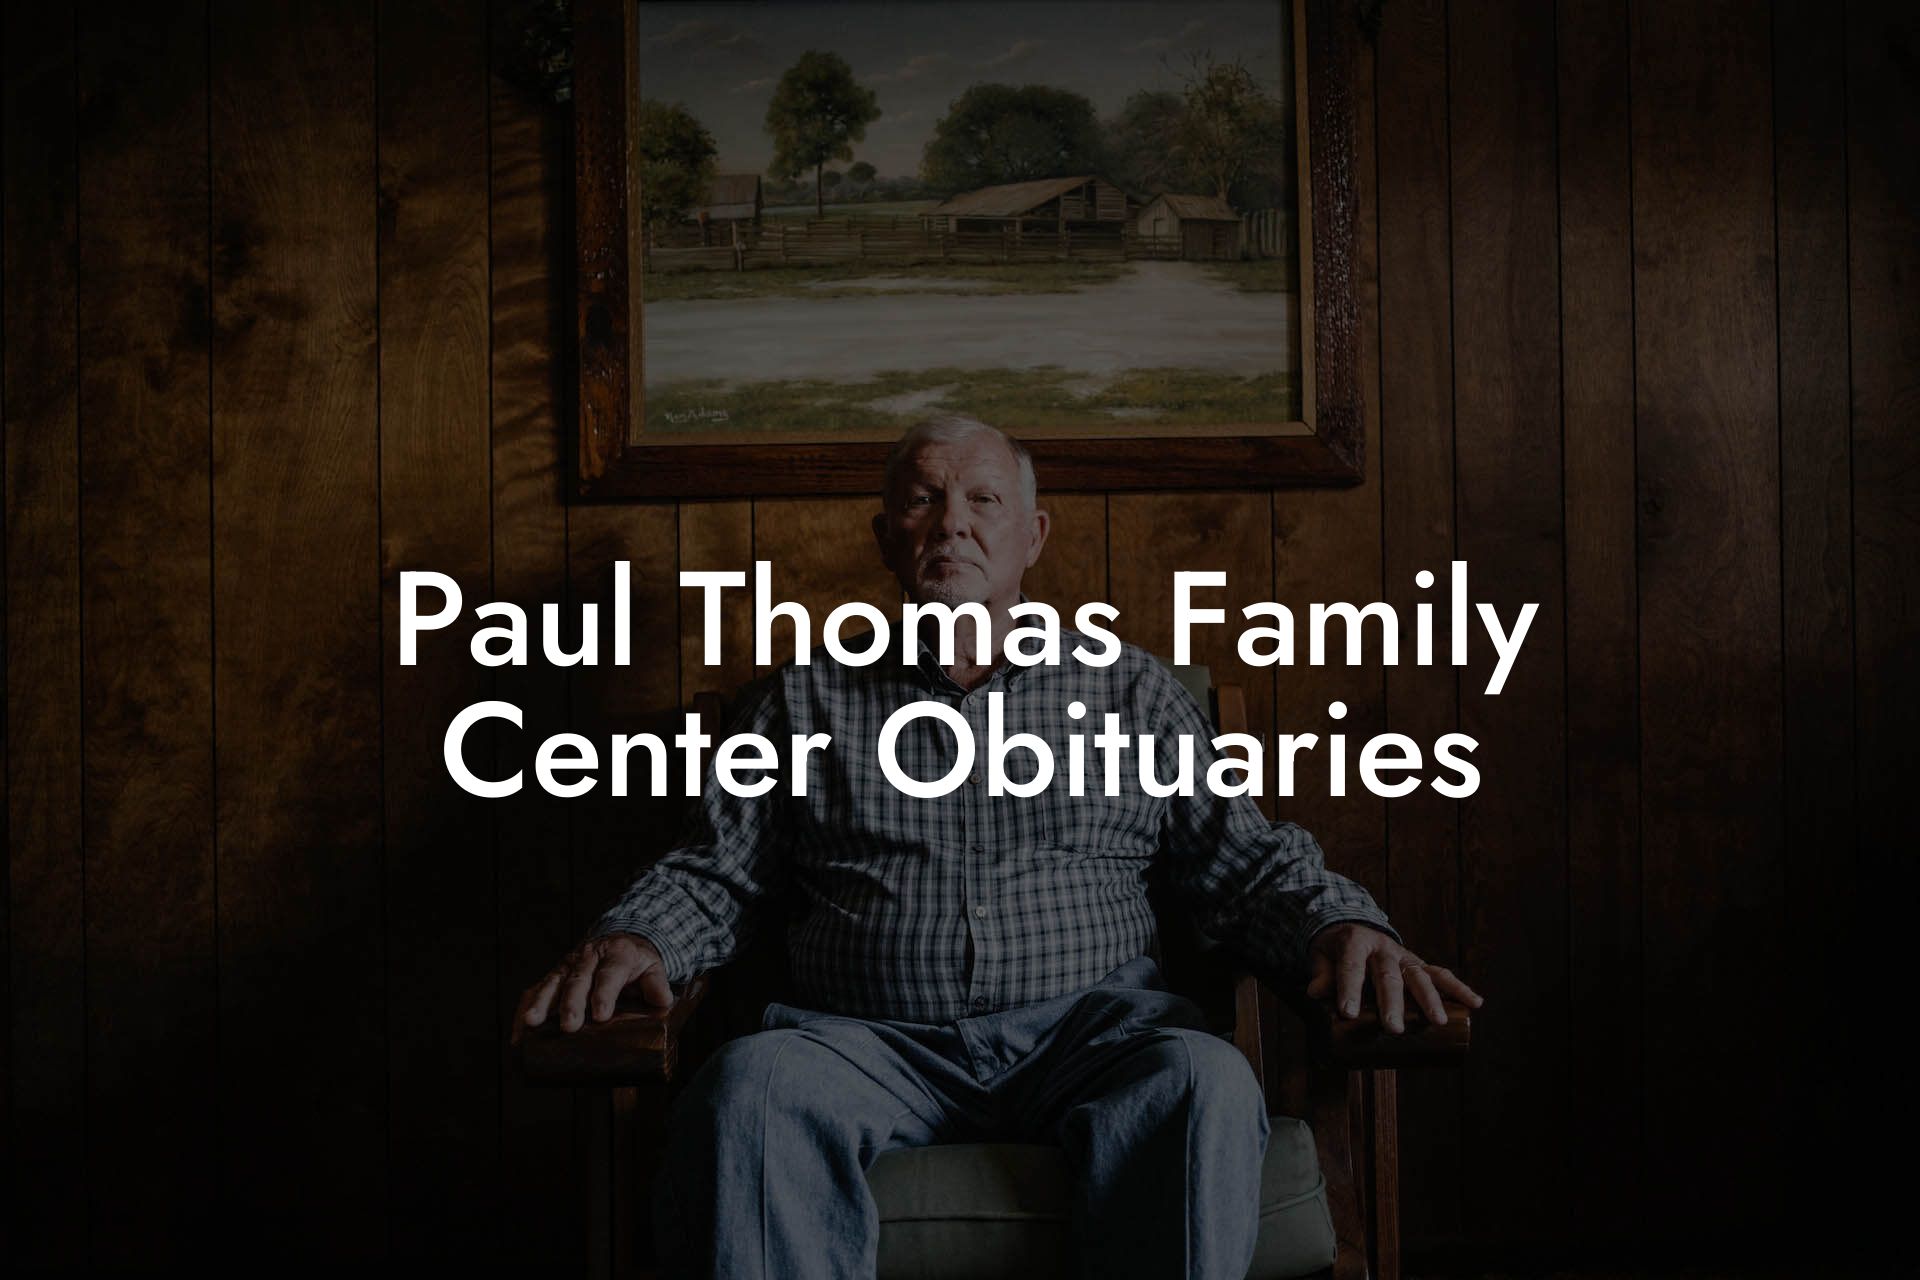 Paul Thomas Family Center Obituaries